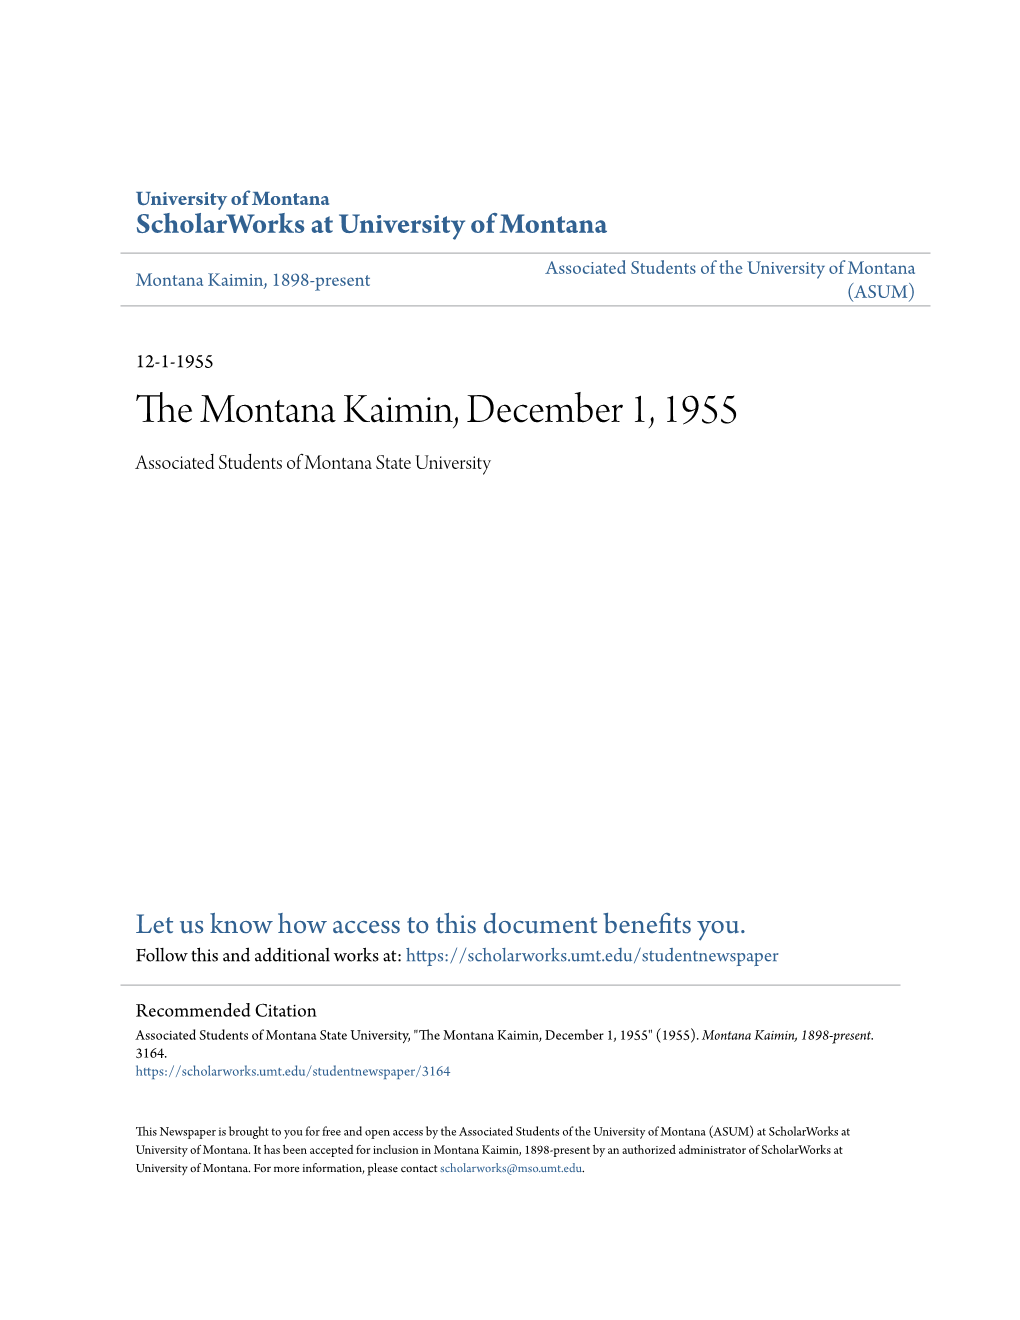 The Montana Kaimin, December 1, 1955